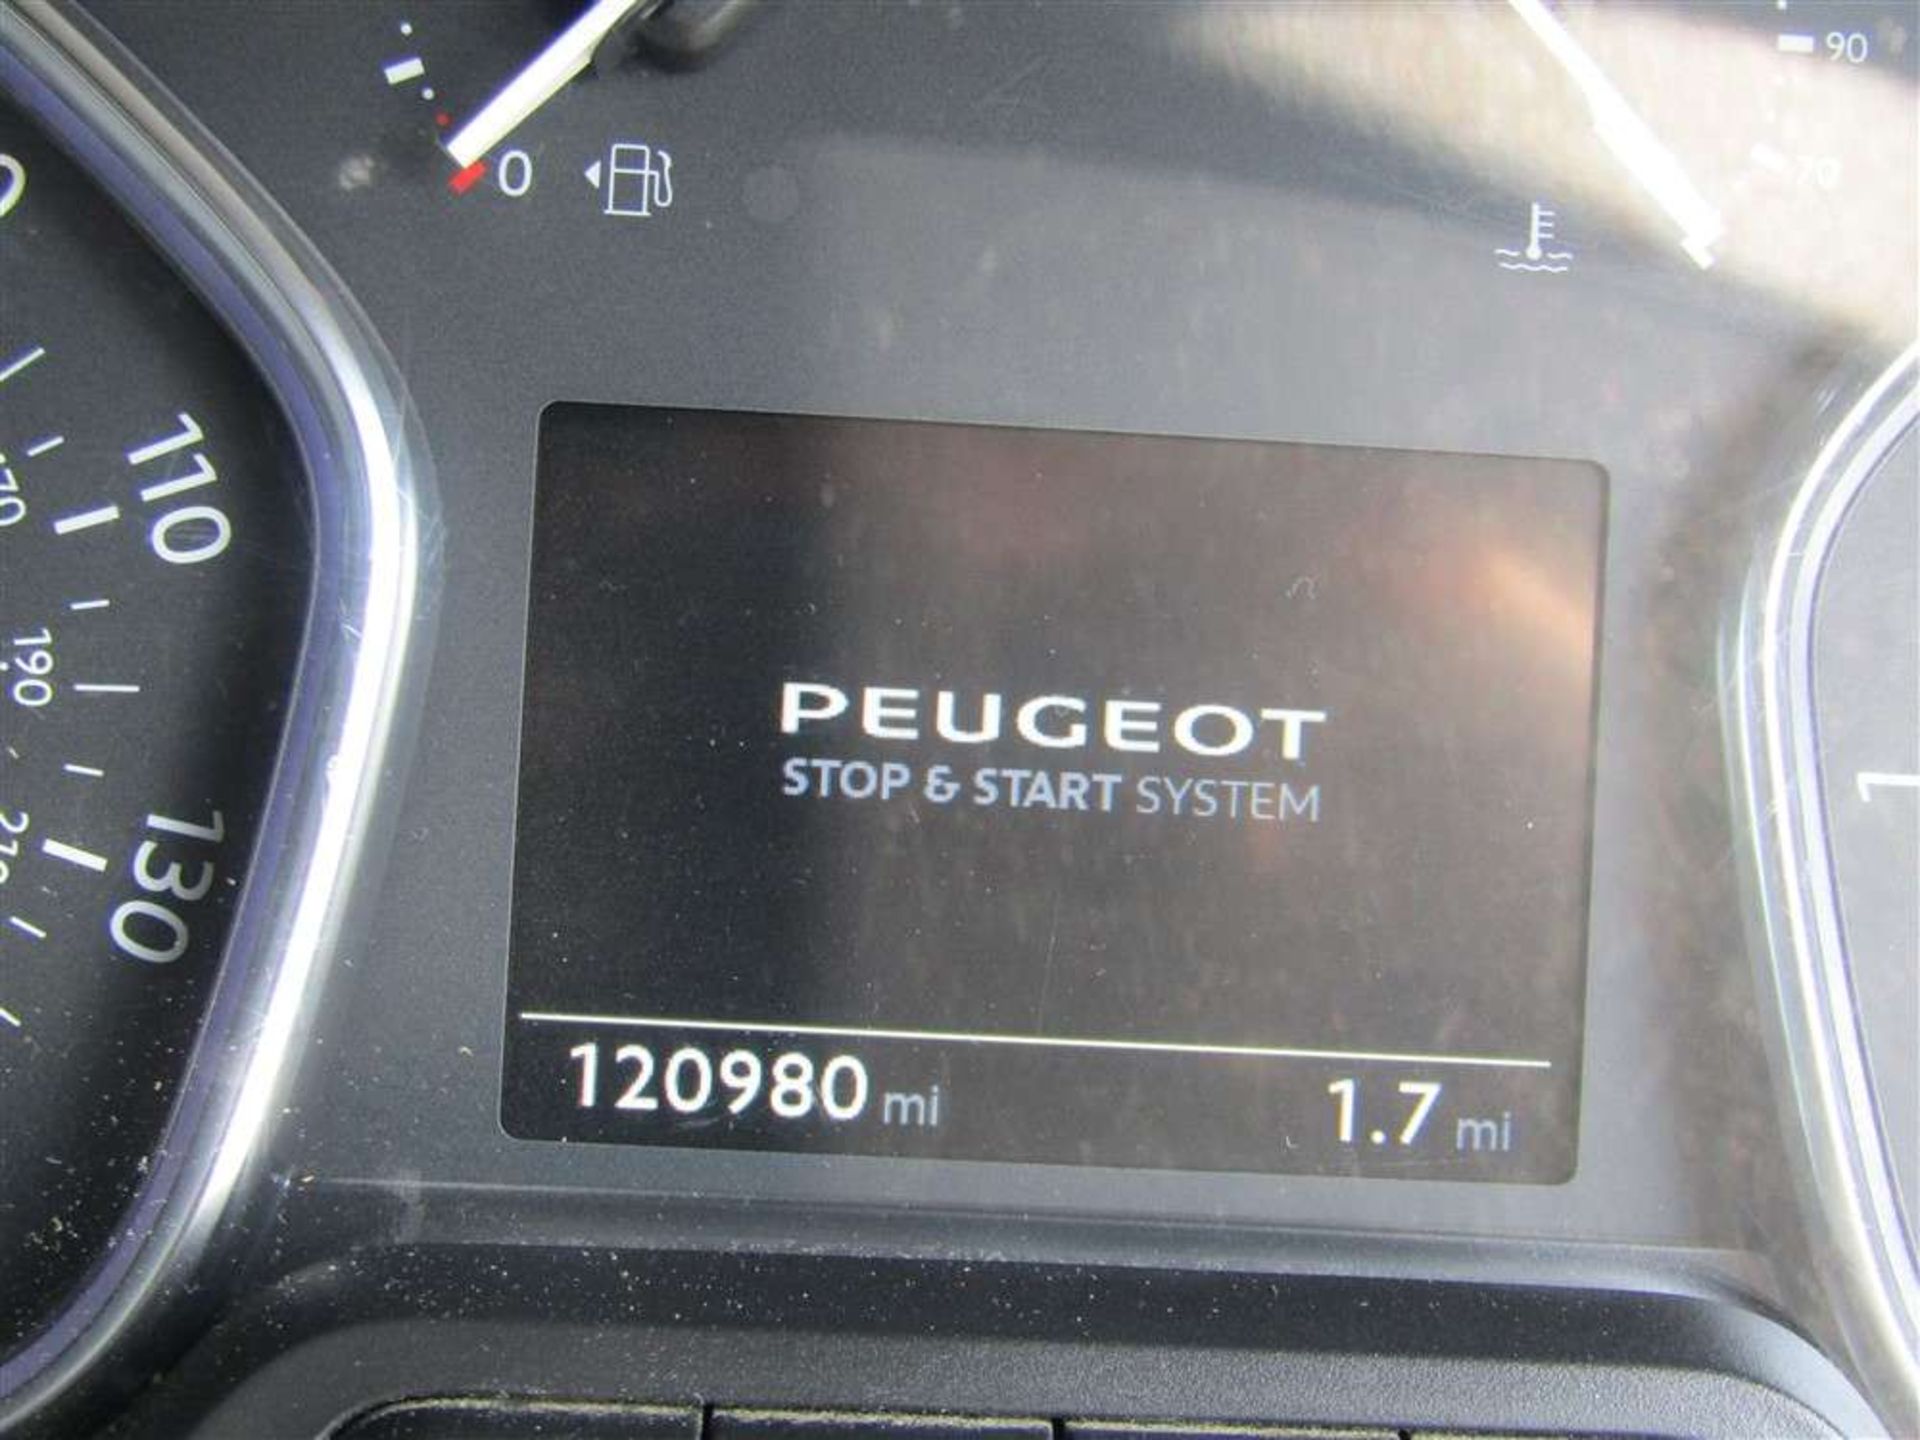 2017 17 reg Peugeot Expert Pro Standard Blue HDI - Image 7 of 7